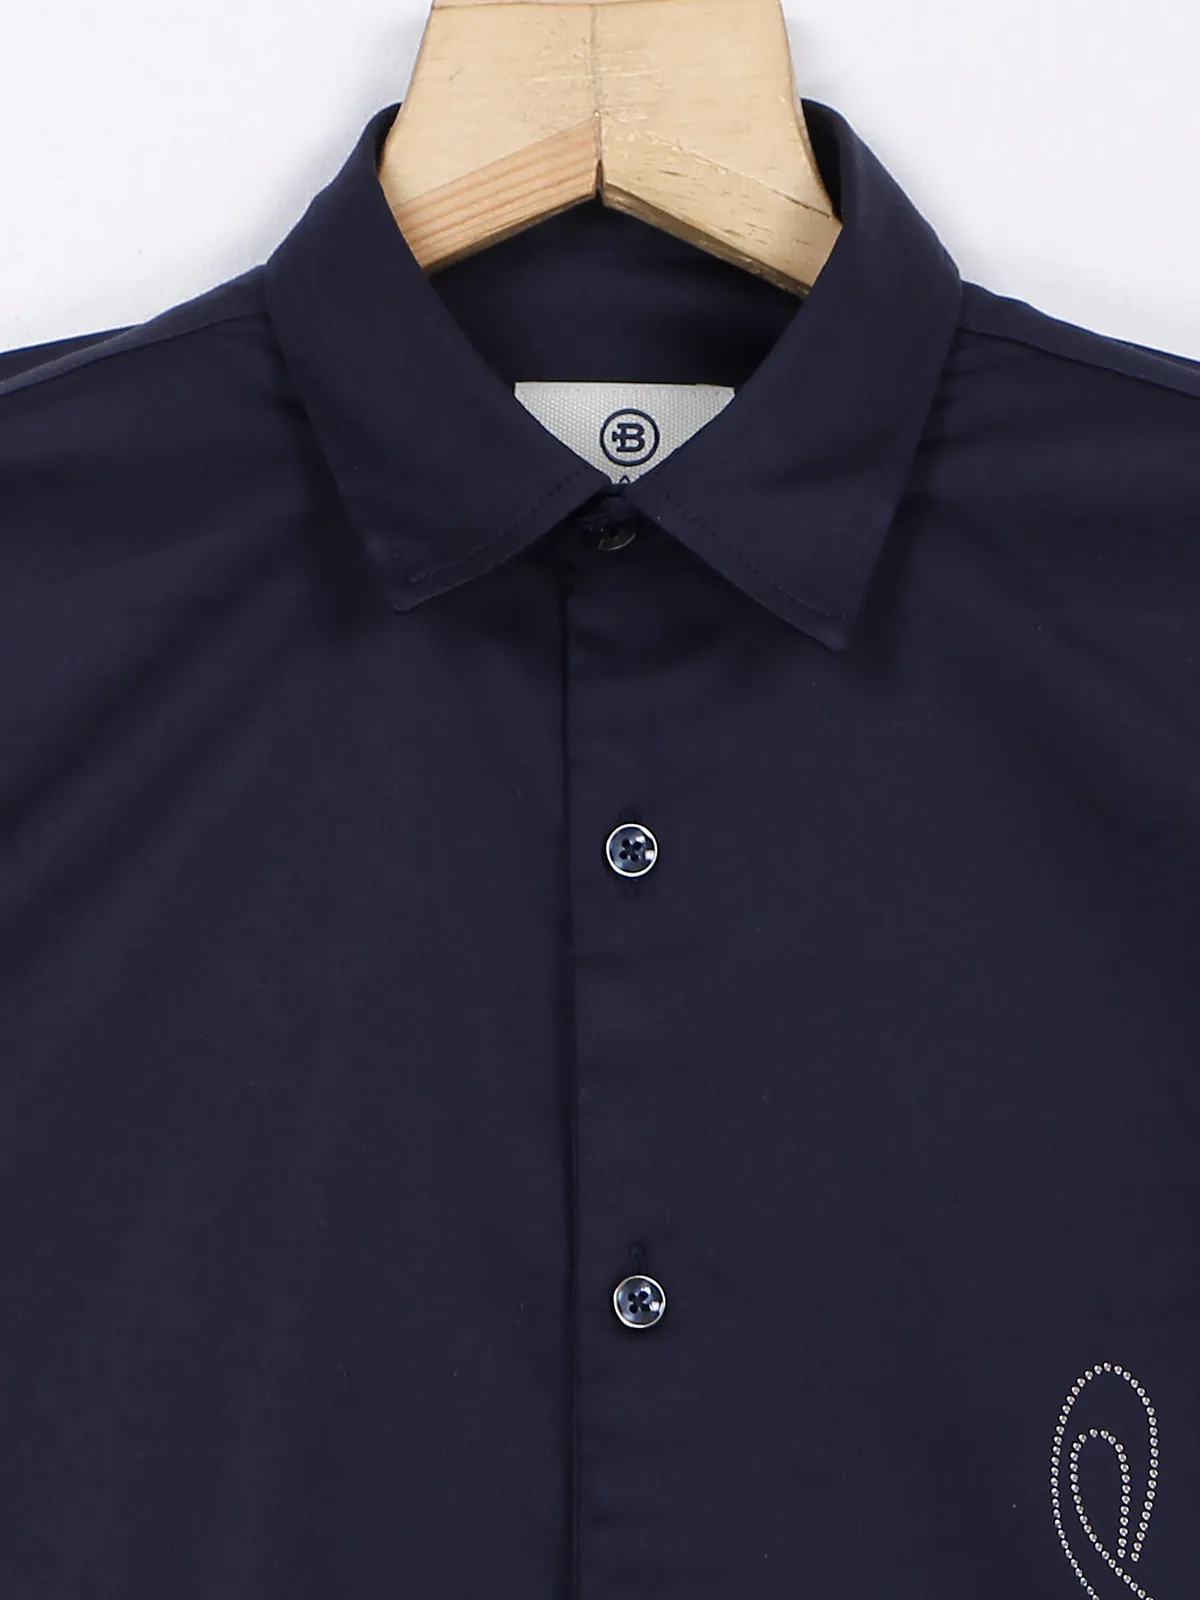 Blazo navy cotton full sleeves shirt